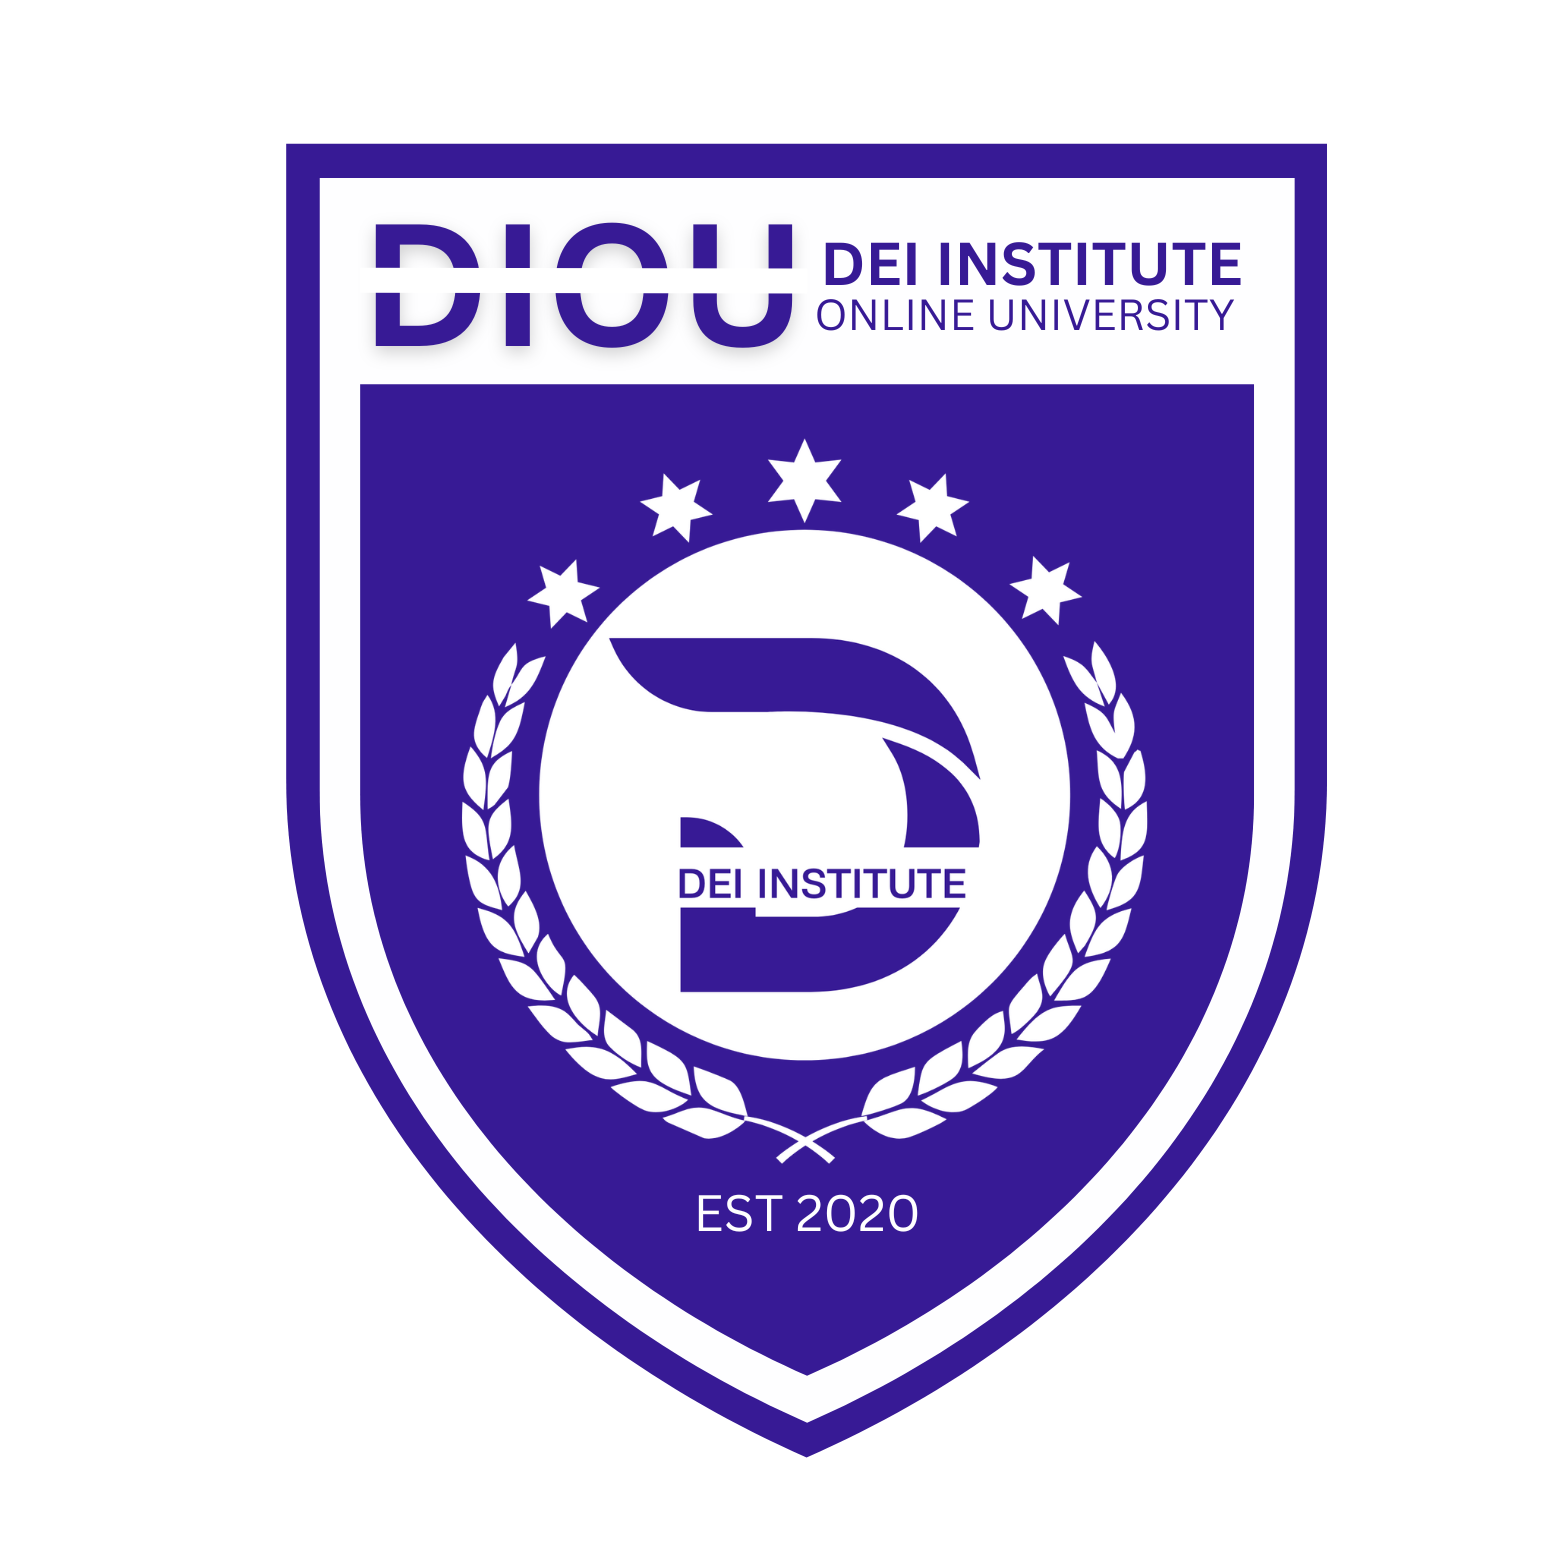 Dei Institute - Online University (DIOU)